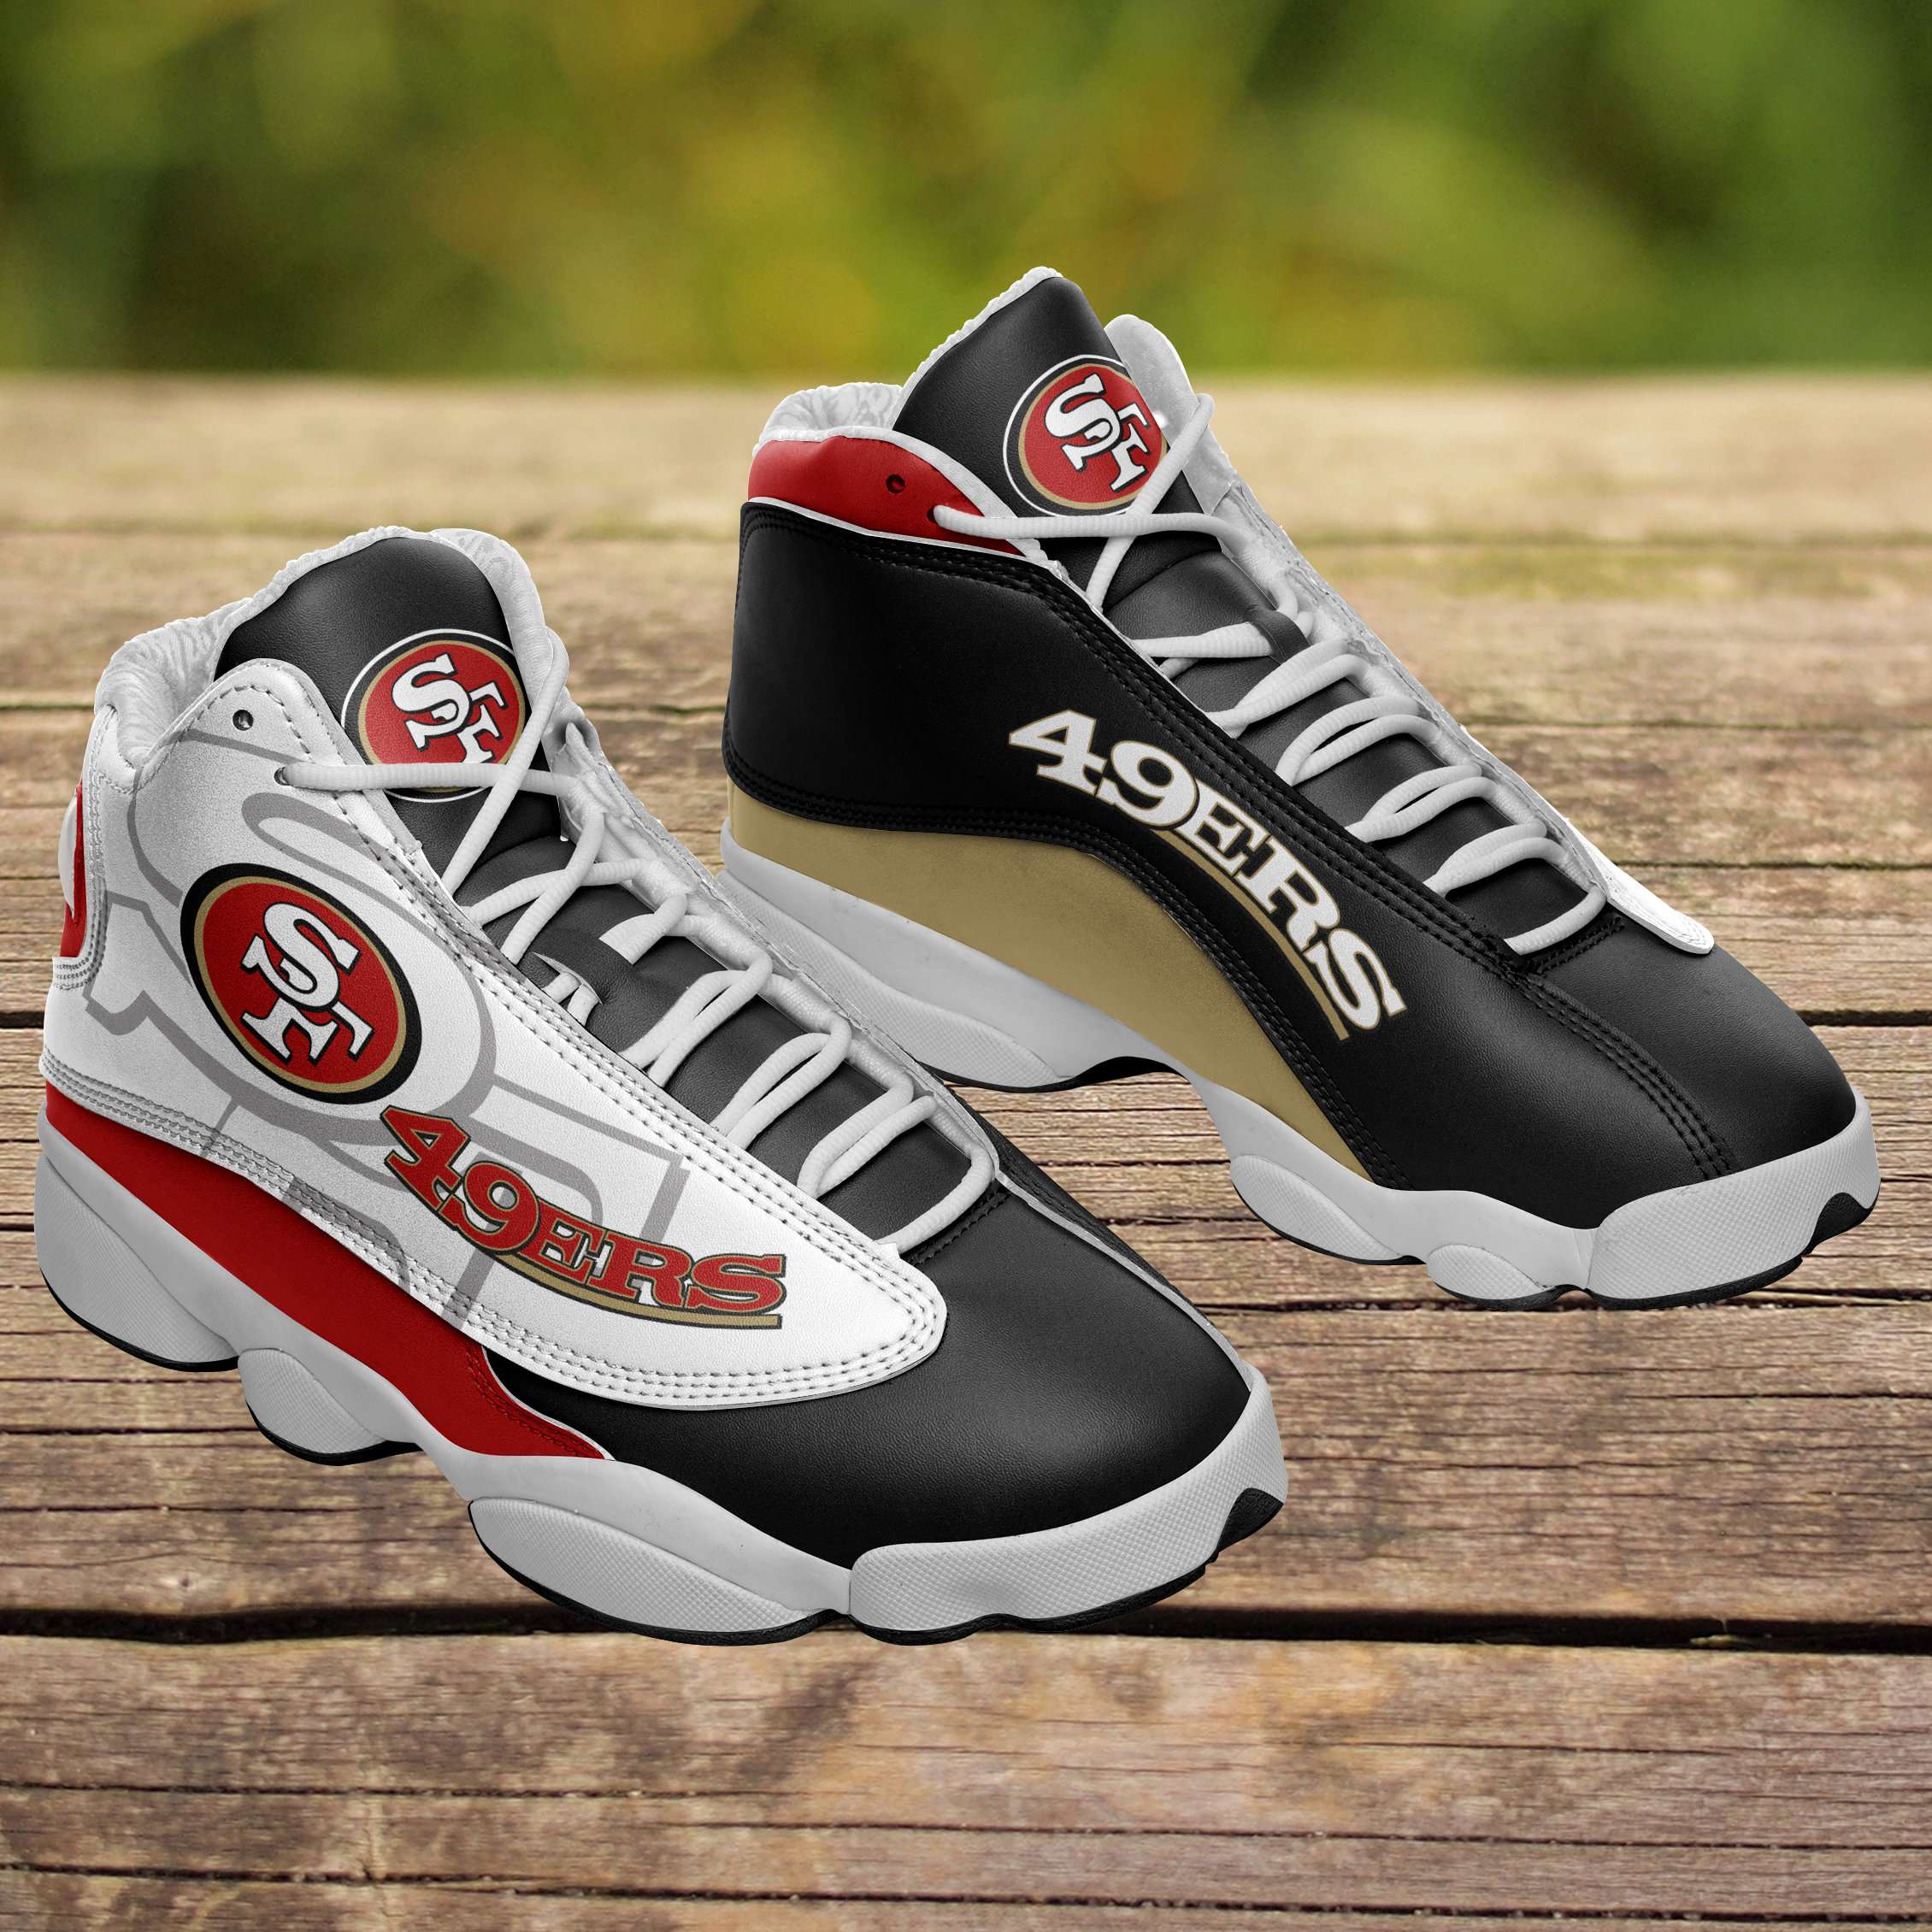 San Francisco 49ers Air Jordan 13 Shoes - Customization Trend